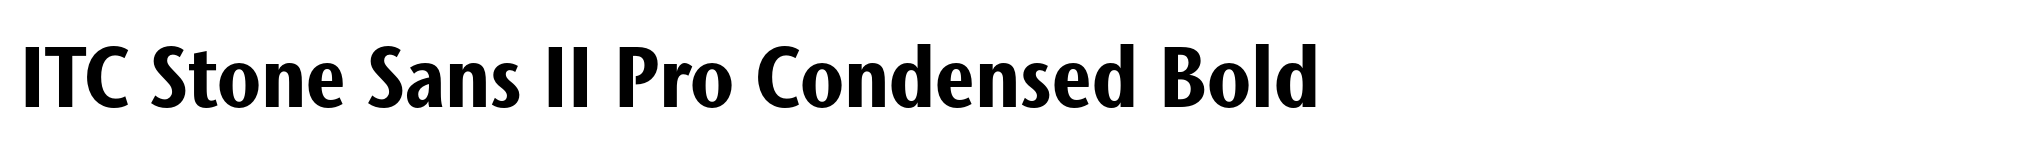 ITC Stone Sans II Pro Condensed Bold image